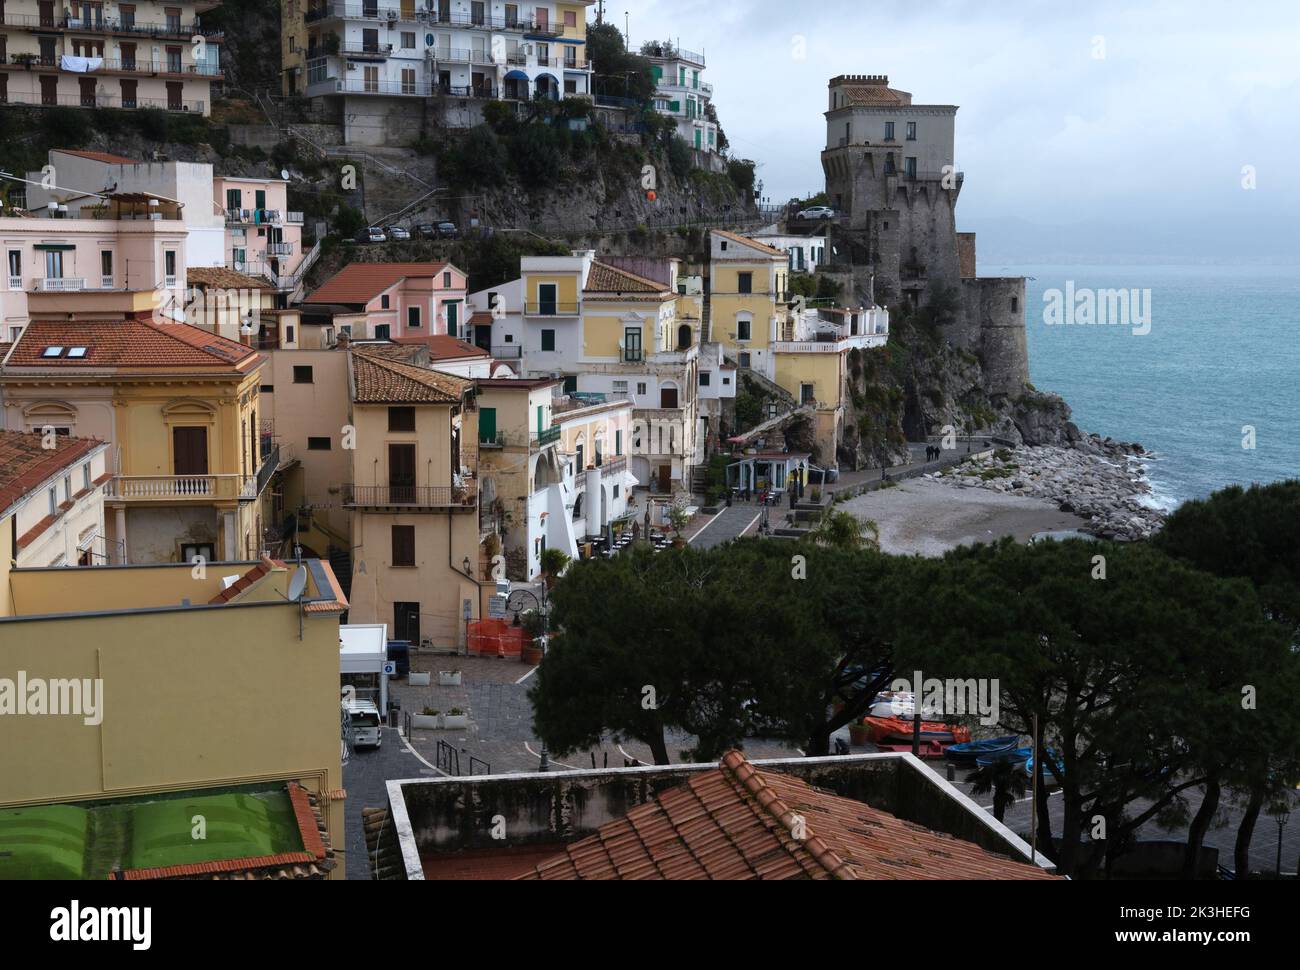 Old buildings in Cetara, architecture of Amalfi coast Stock Photo